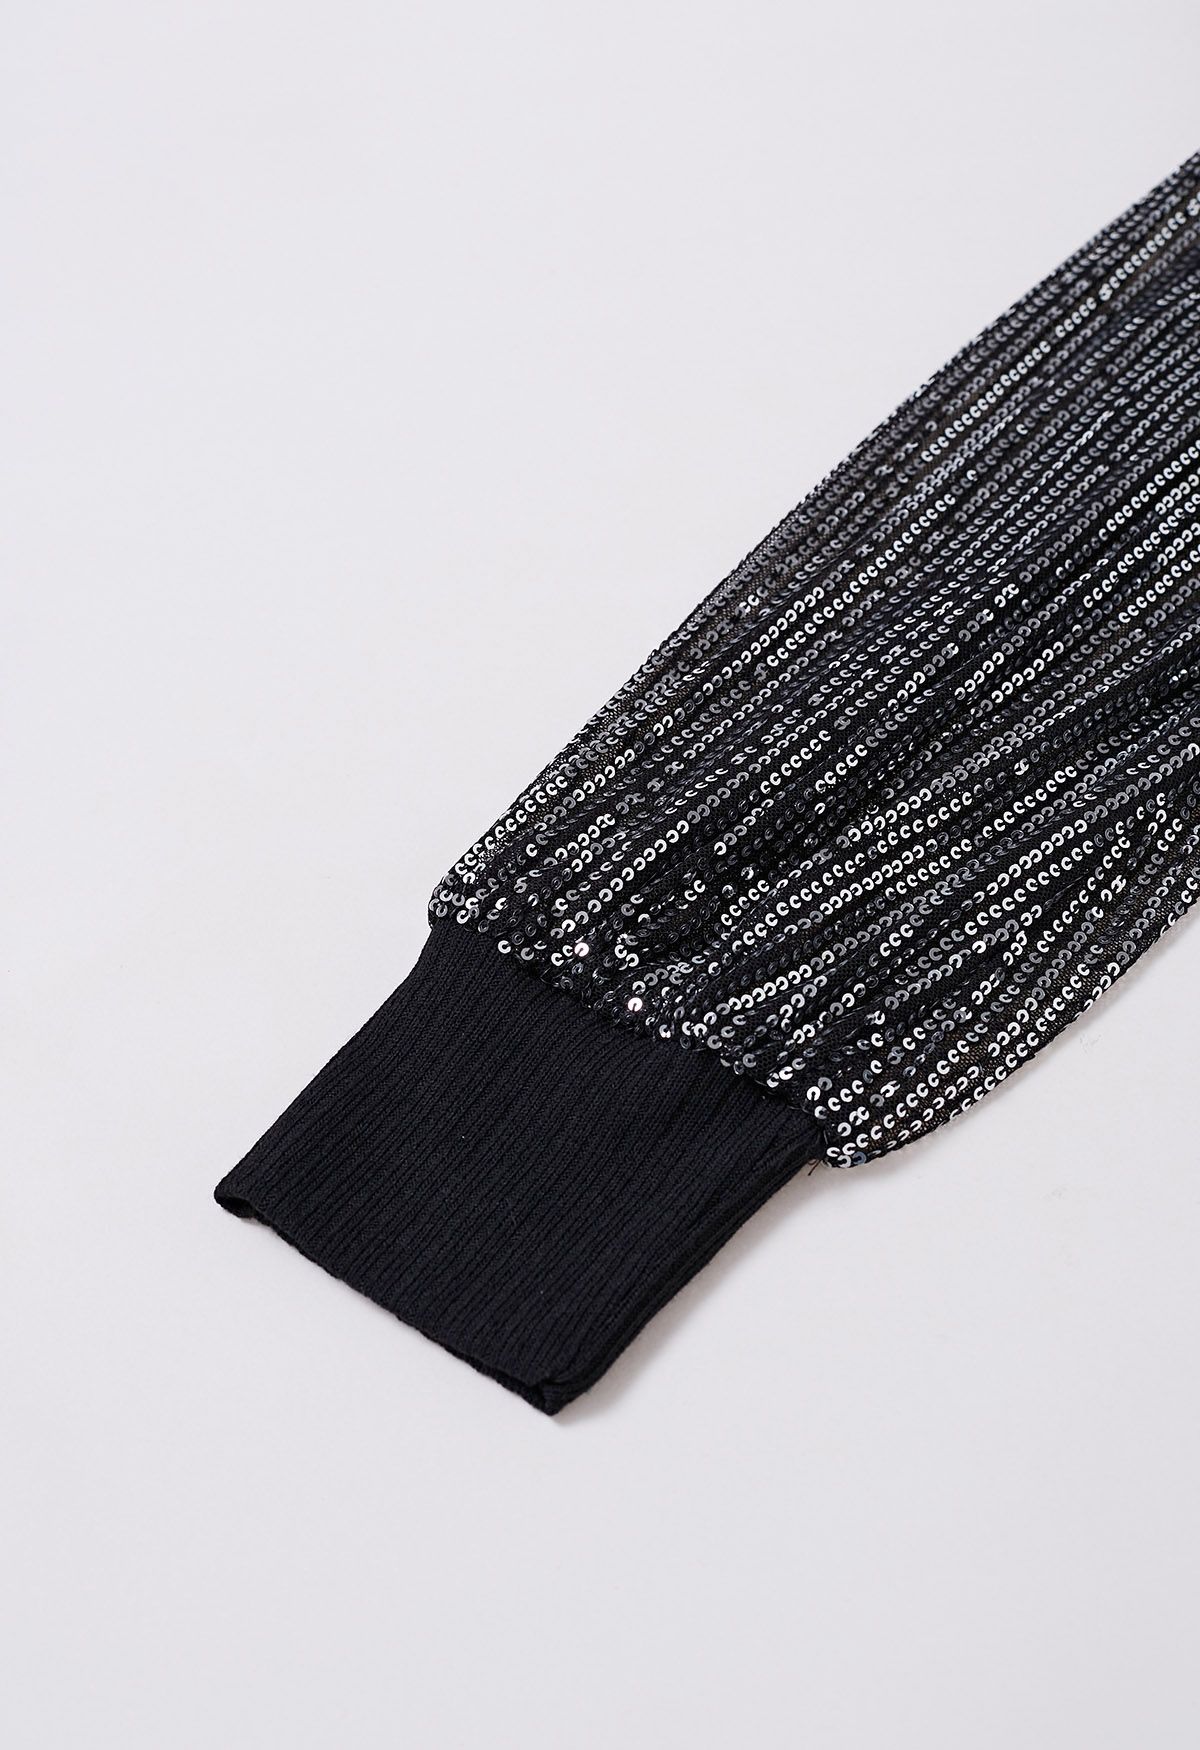 Sequin Mesh Sleeves Mock Neck Knit Top in Black